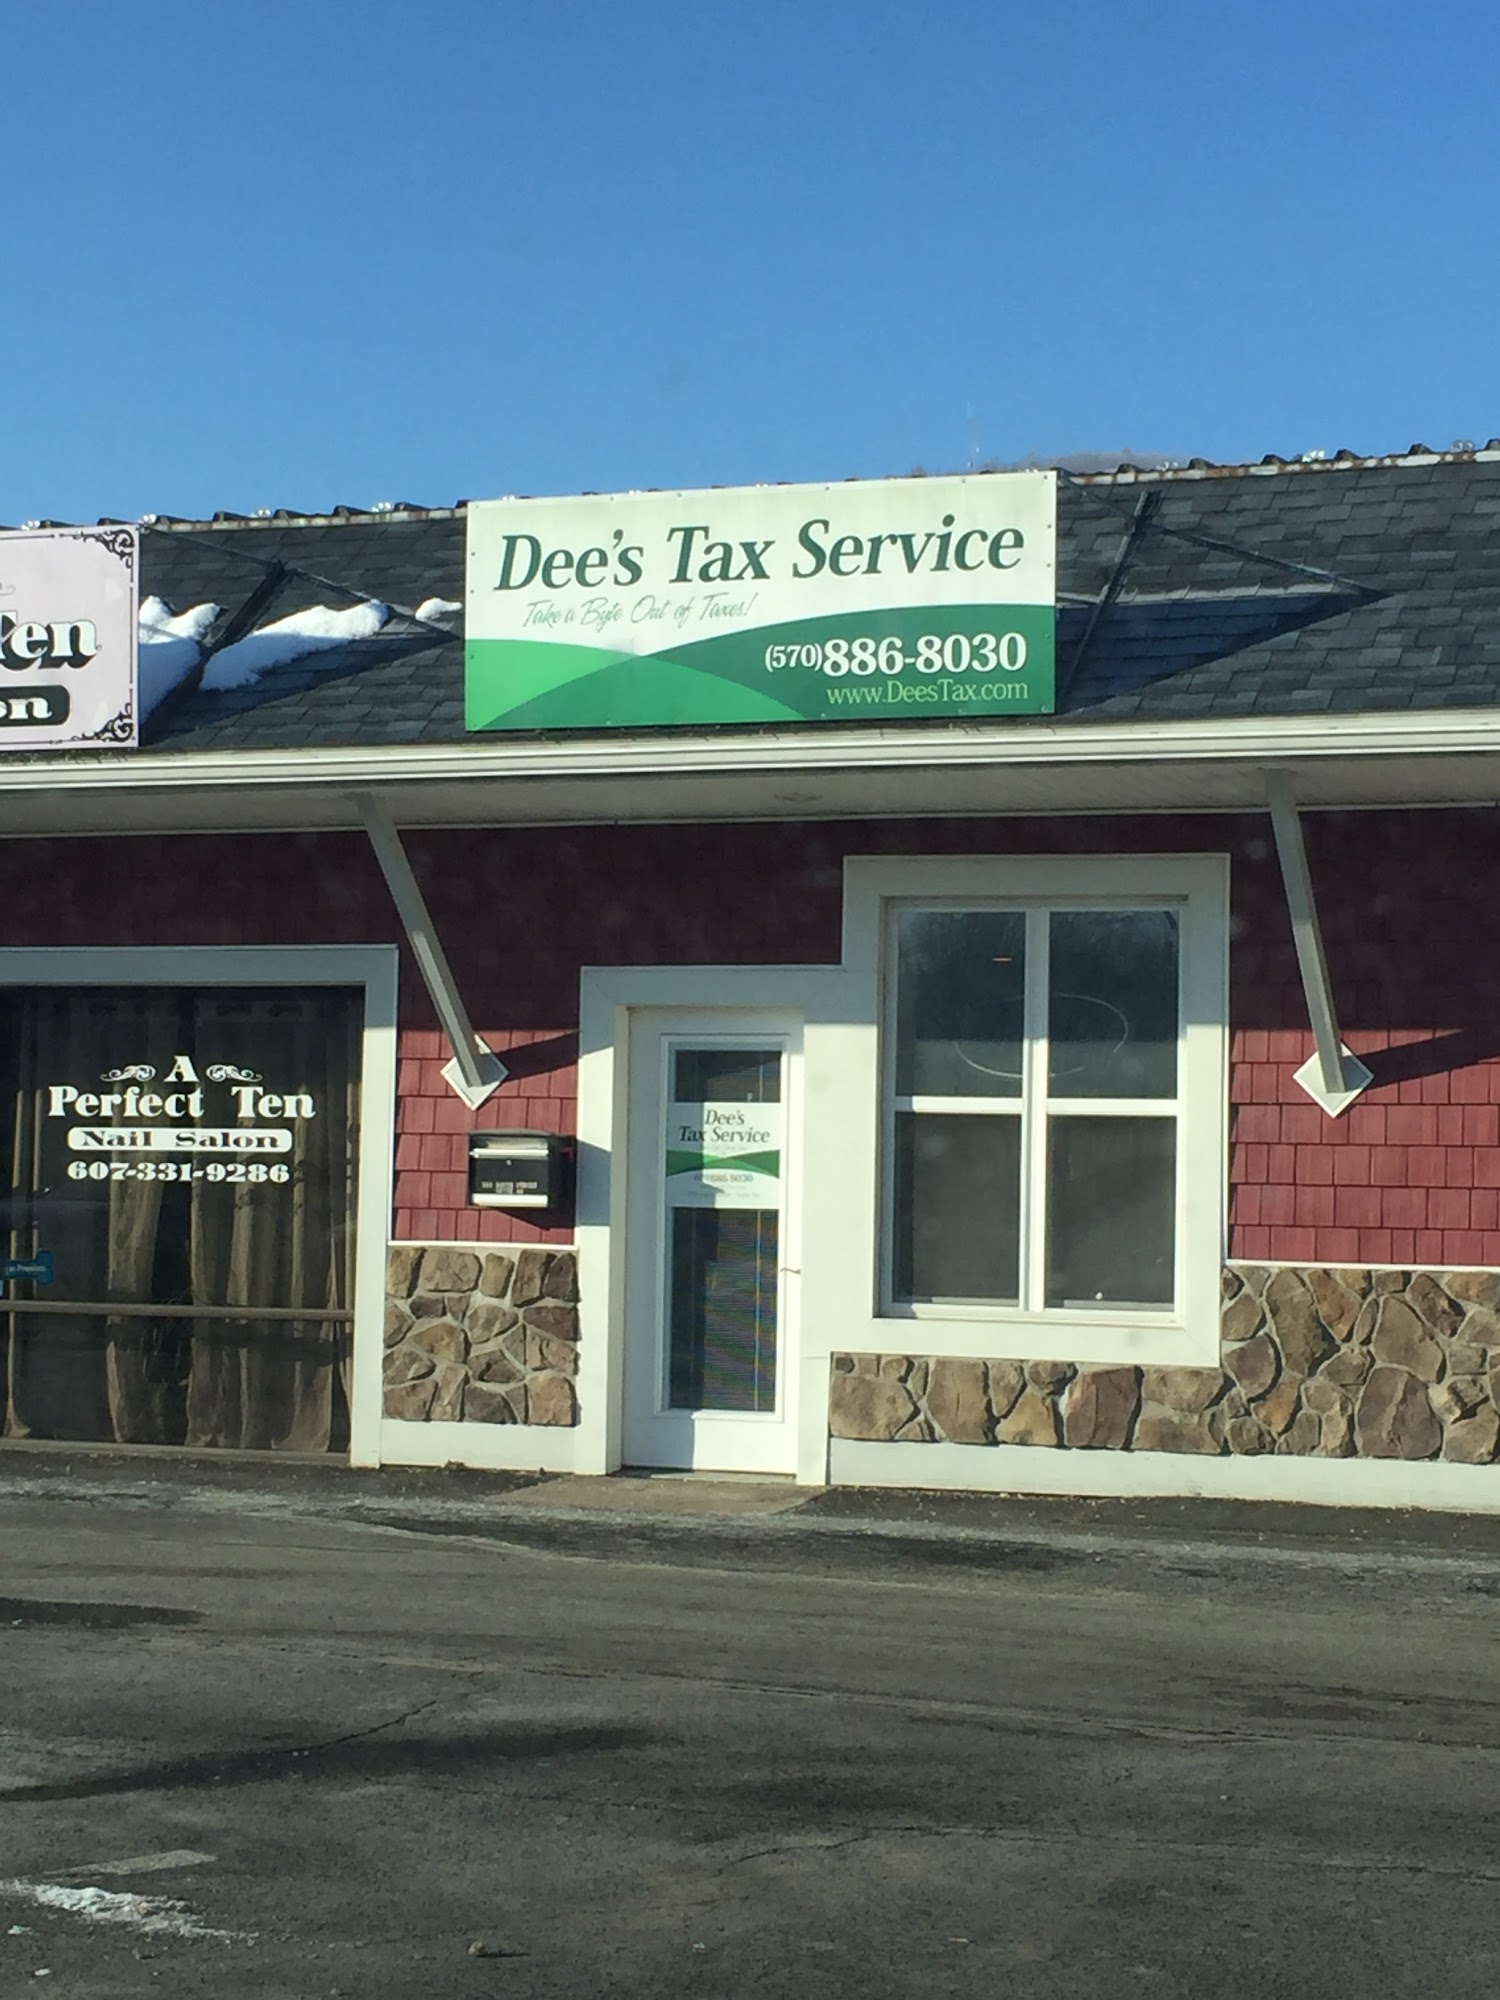 Dee's Tax Service 203 South St suite a, Athens Pennsylvania 18810